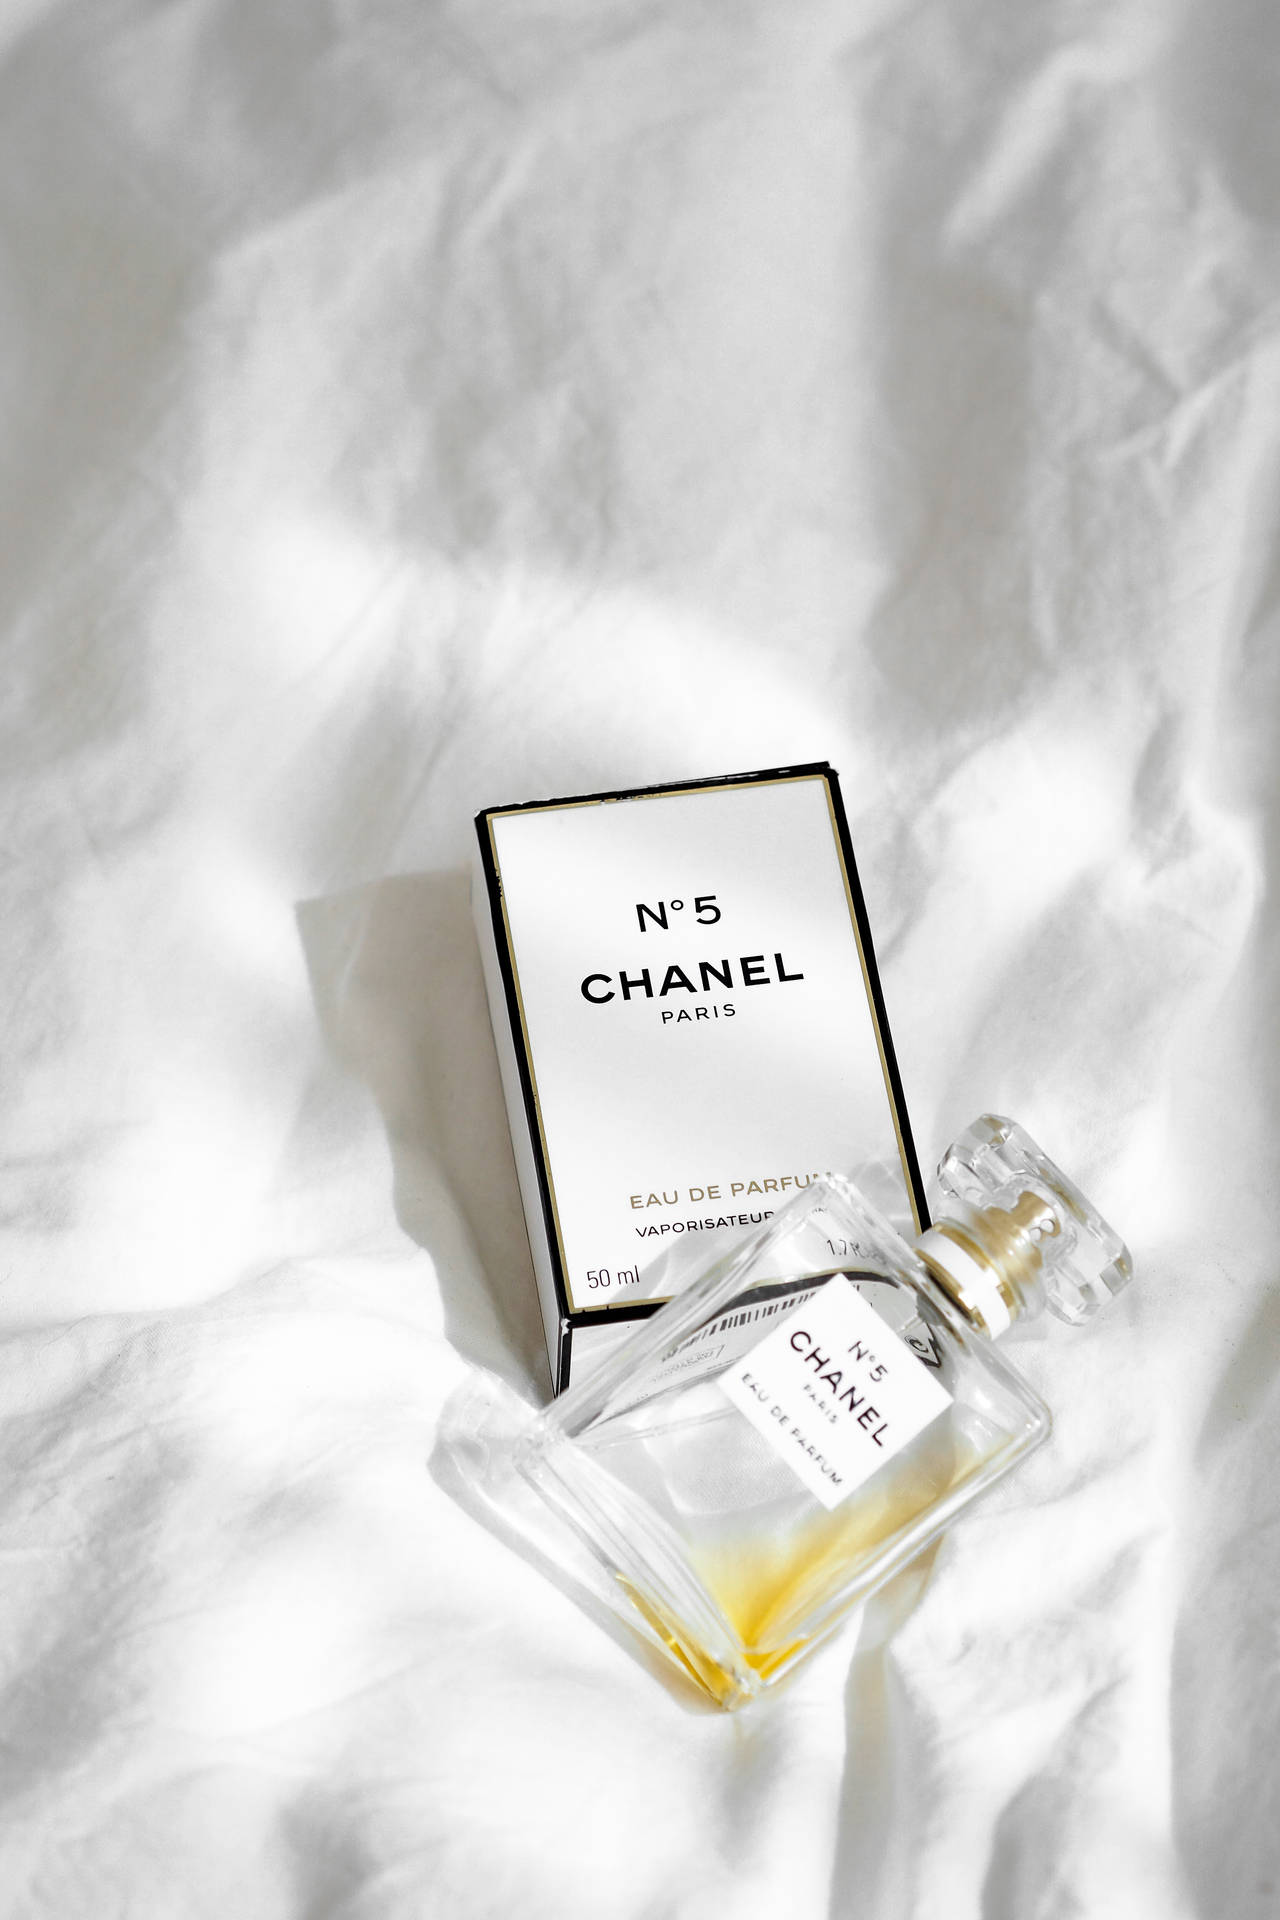 Chanel No. 5 Perfume Empty Bottle Background